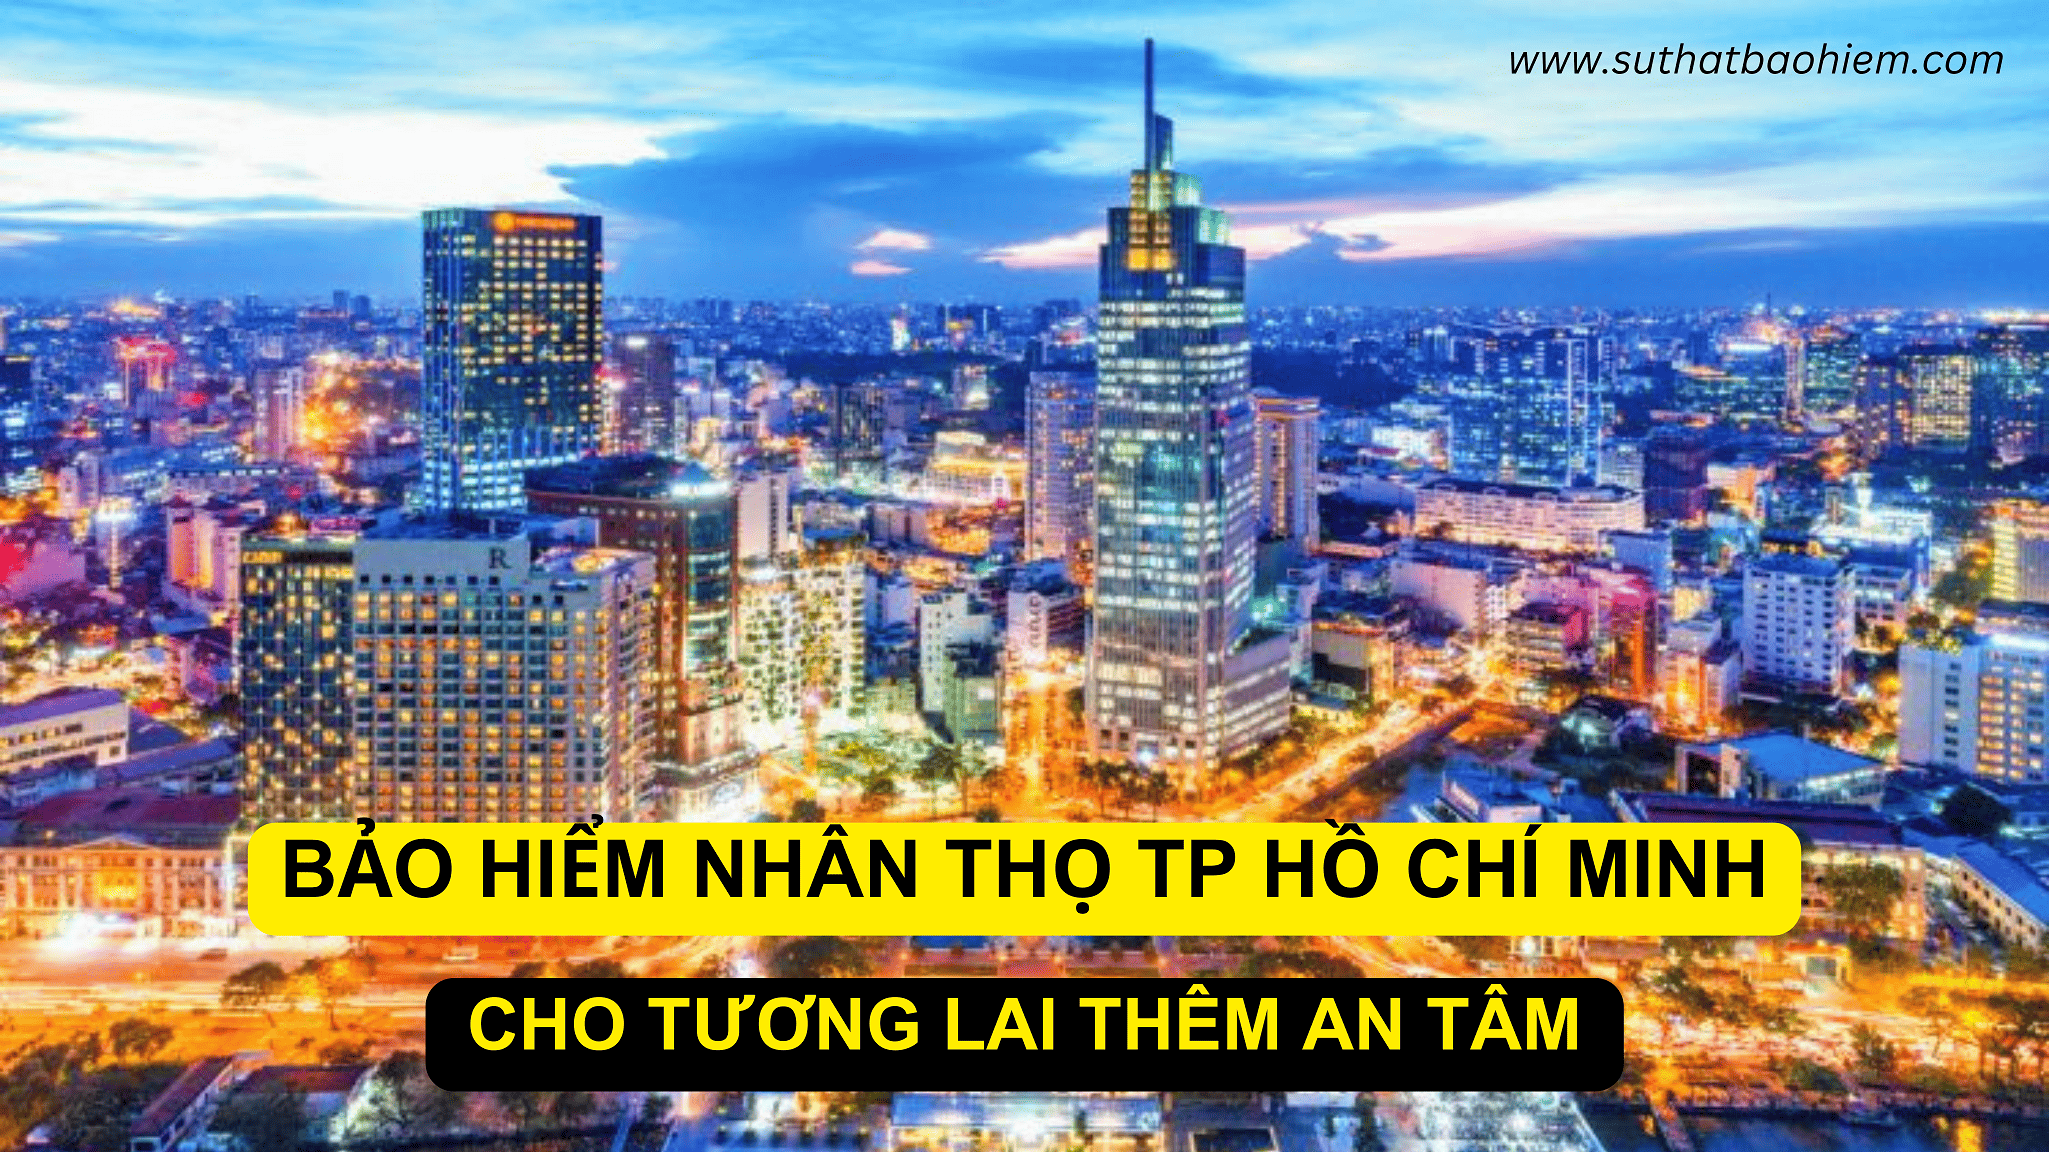 BAO HIEM NHAN THO TP HO CHI MINH